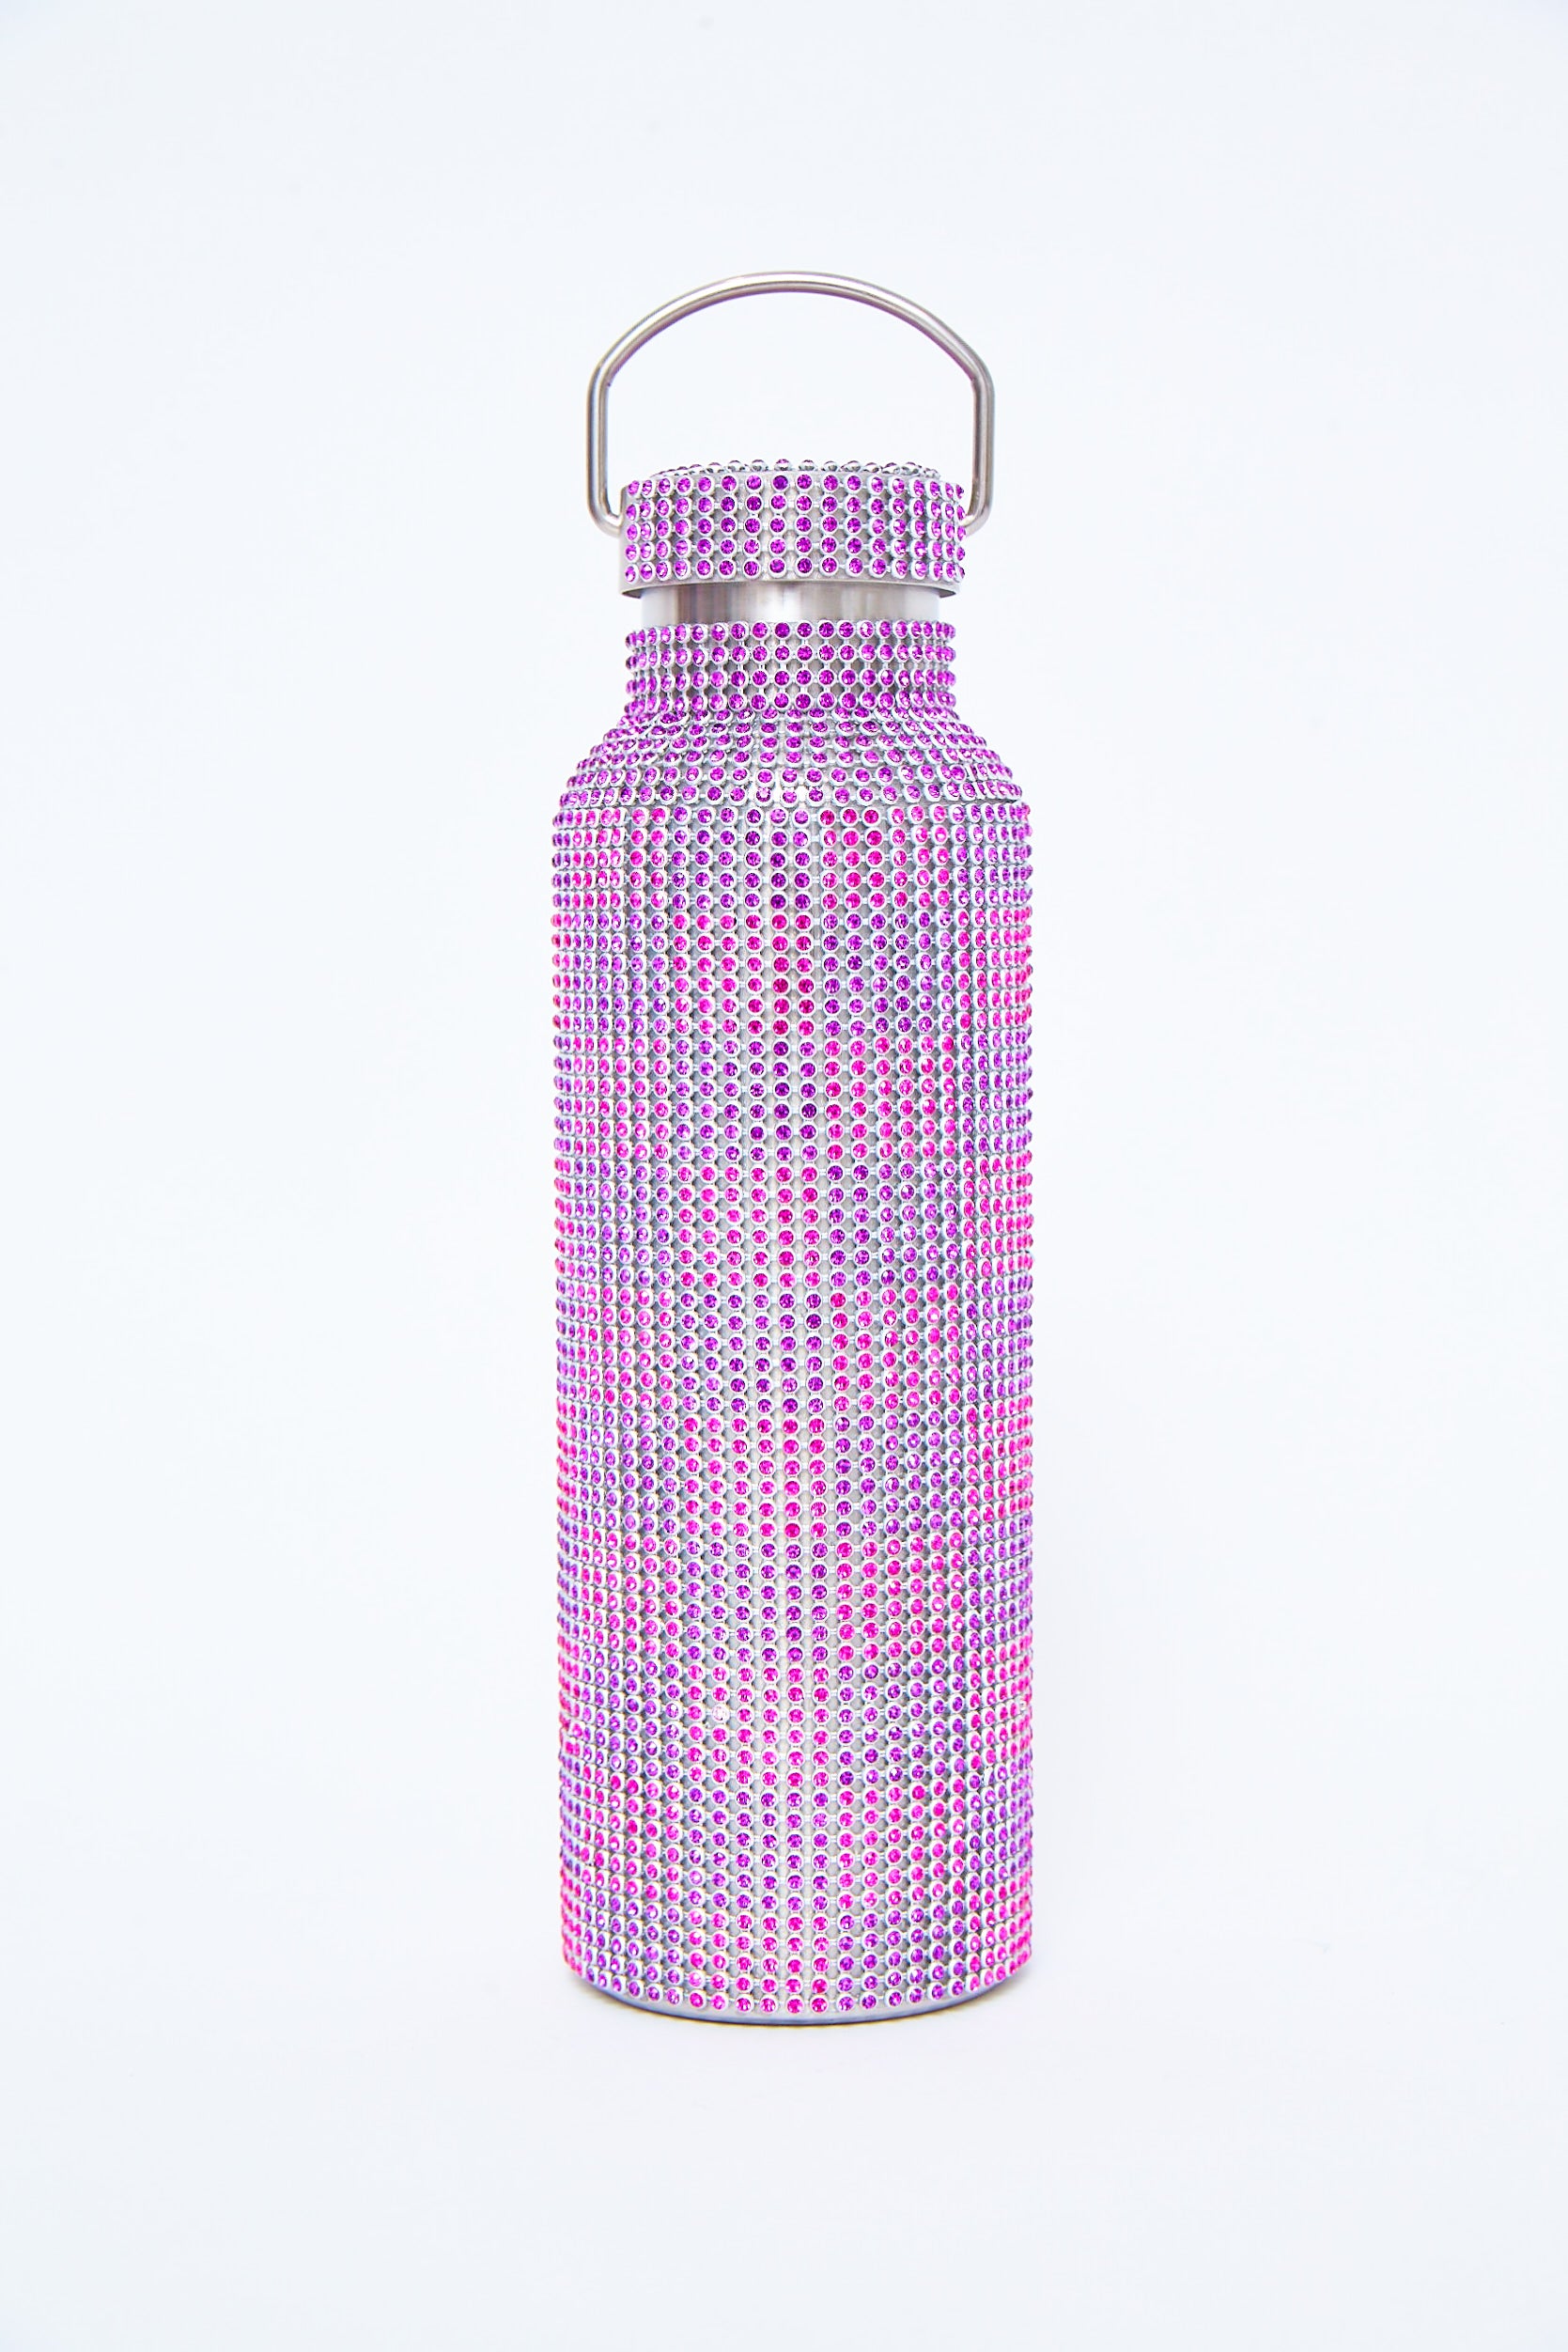 Checkered (pink + black) Water Bottle